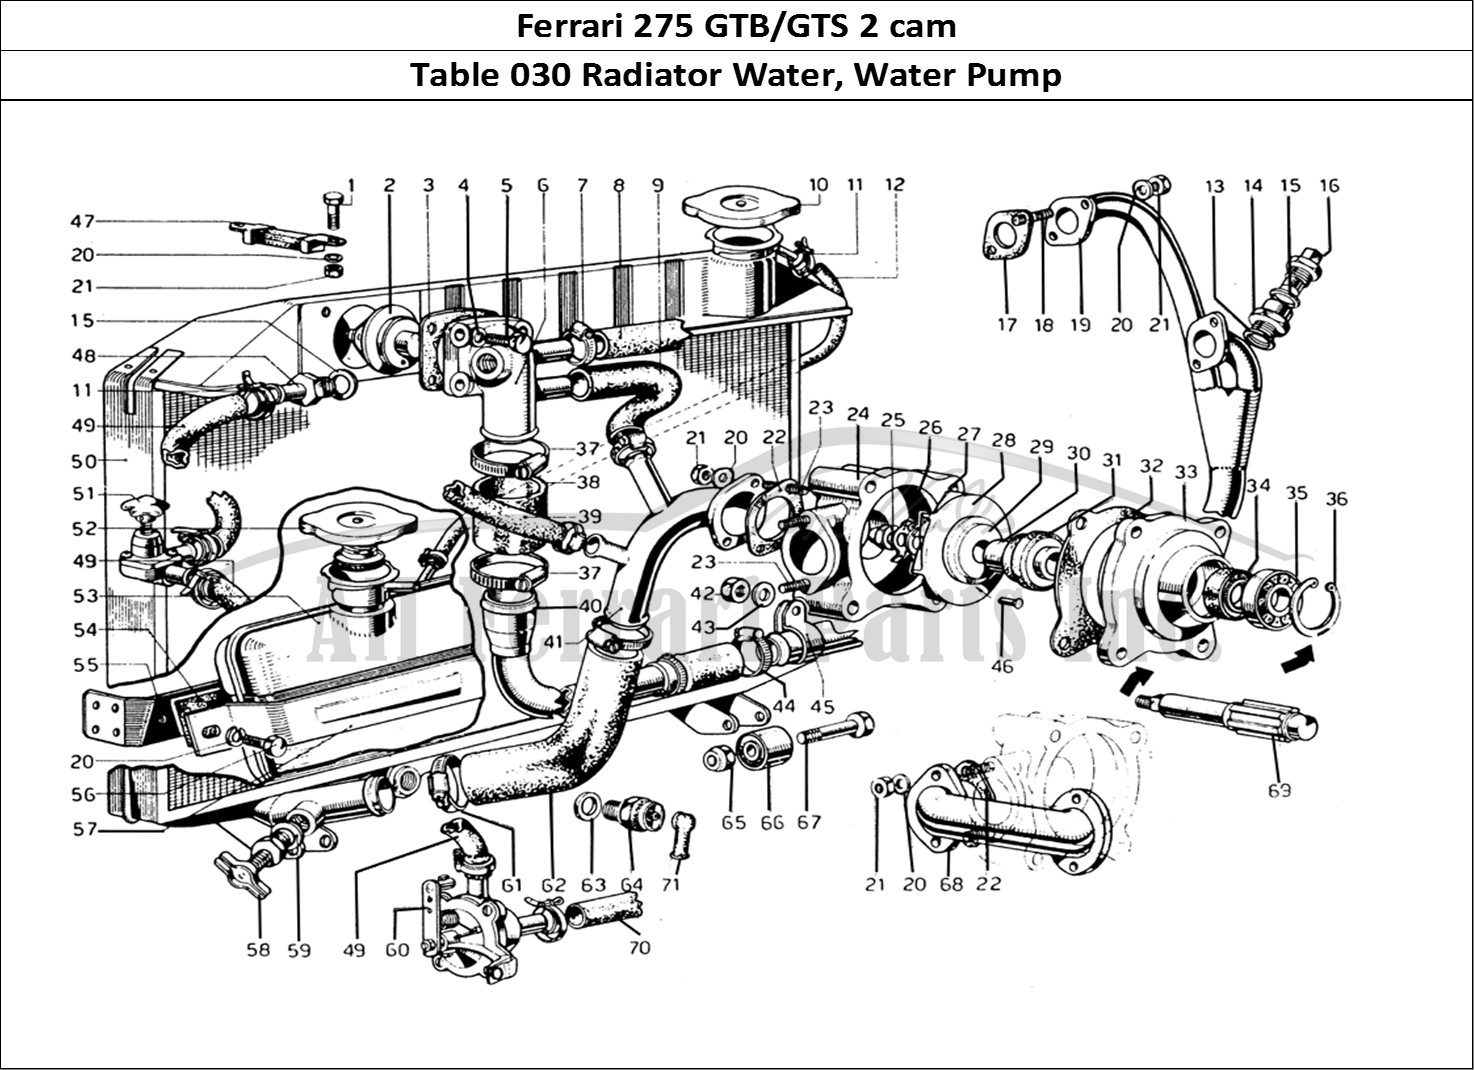 Ferrari Parts Ferrari 275 GTB/GTS 2 cam Page 030 Water Radiator & Water Pu